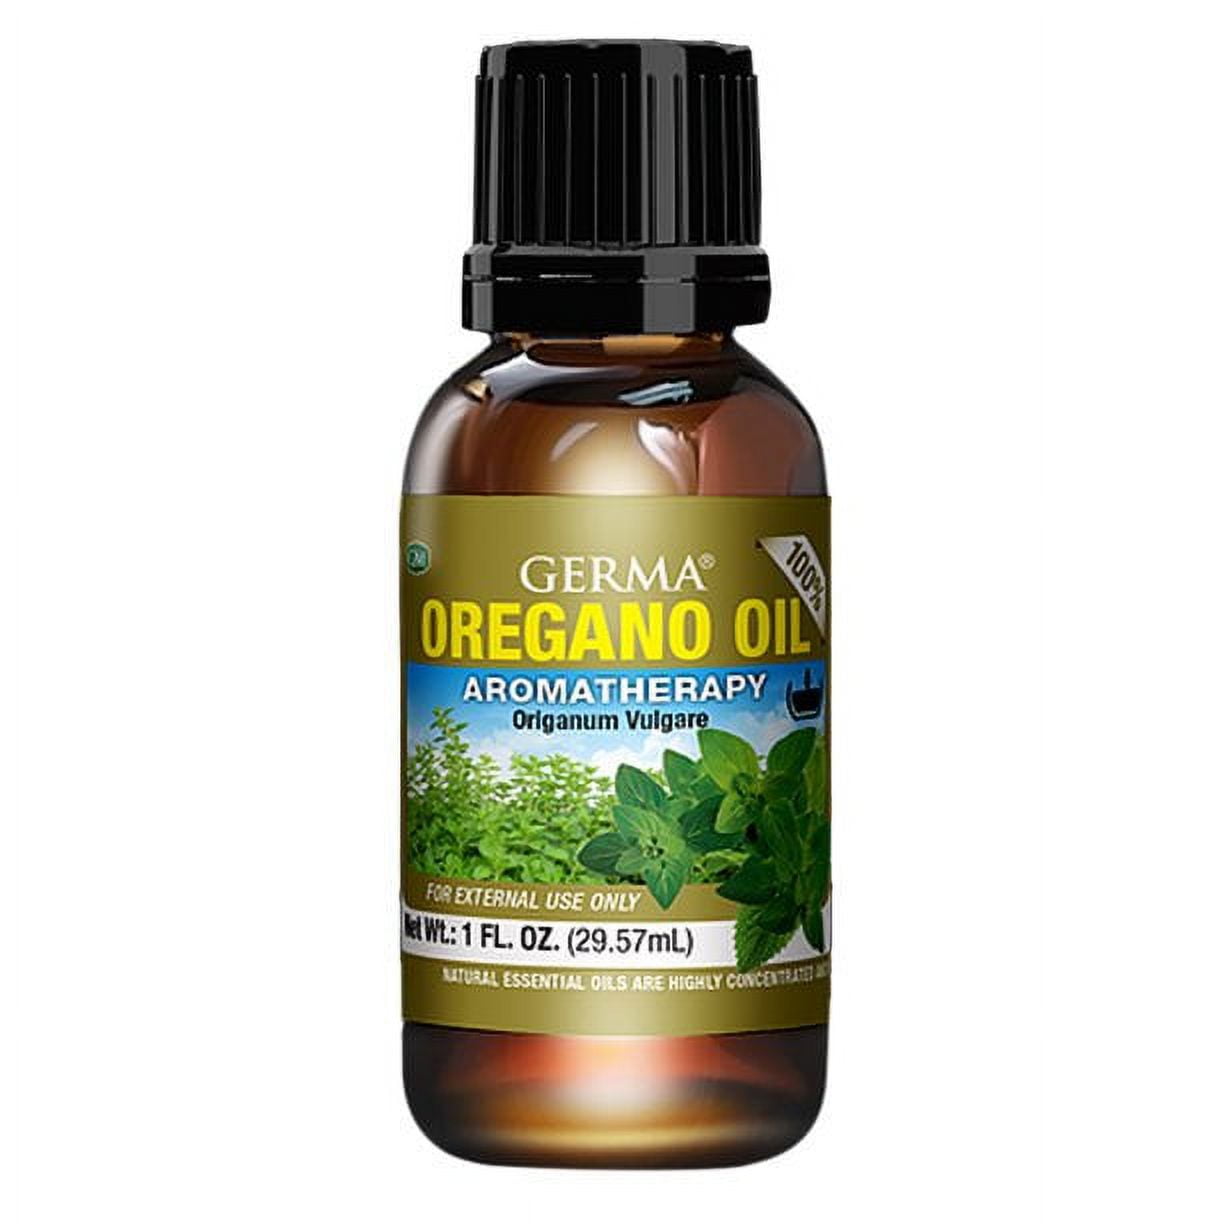 Organic Prickly Pear Seed Oil 1 oz 